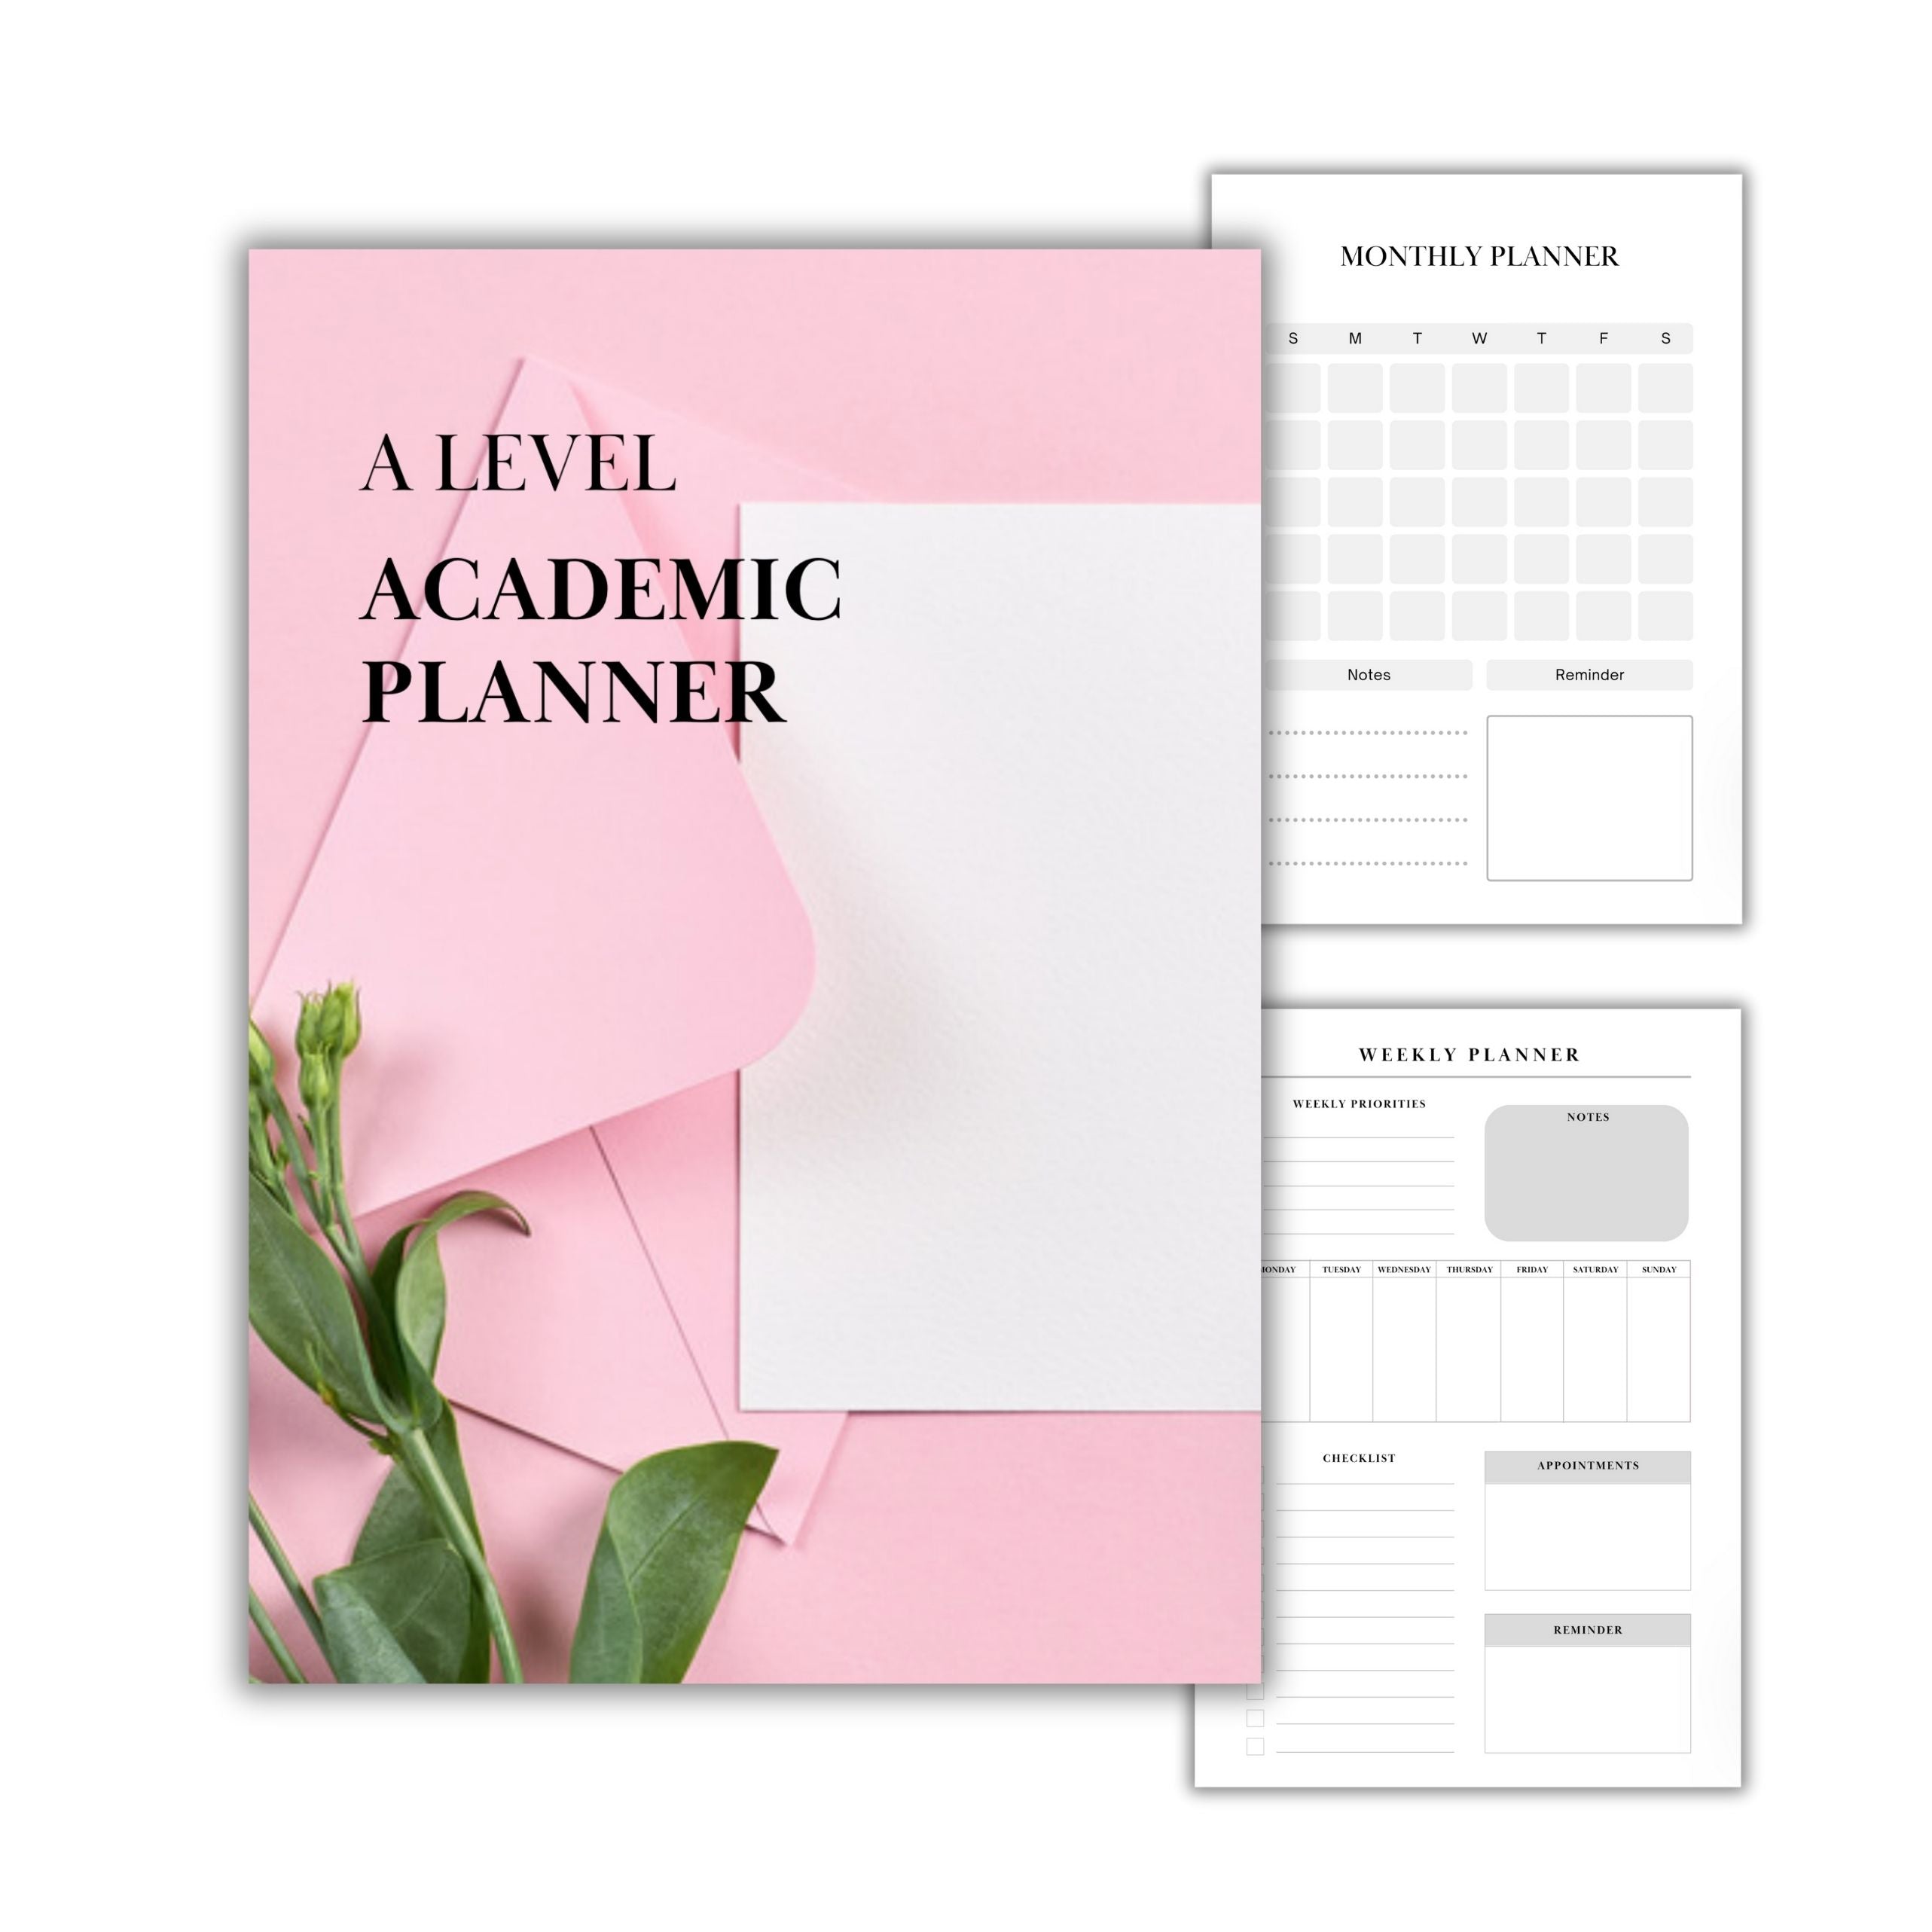 A Level Academic Planner Booklet Digital Download